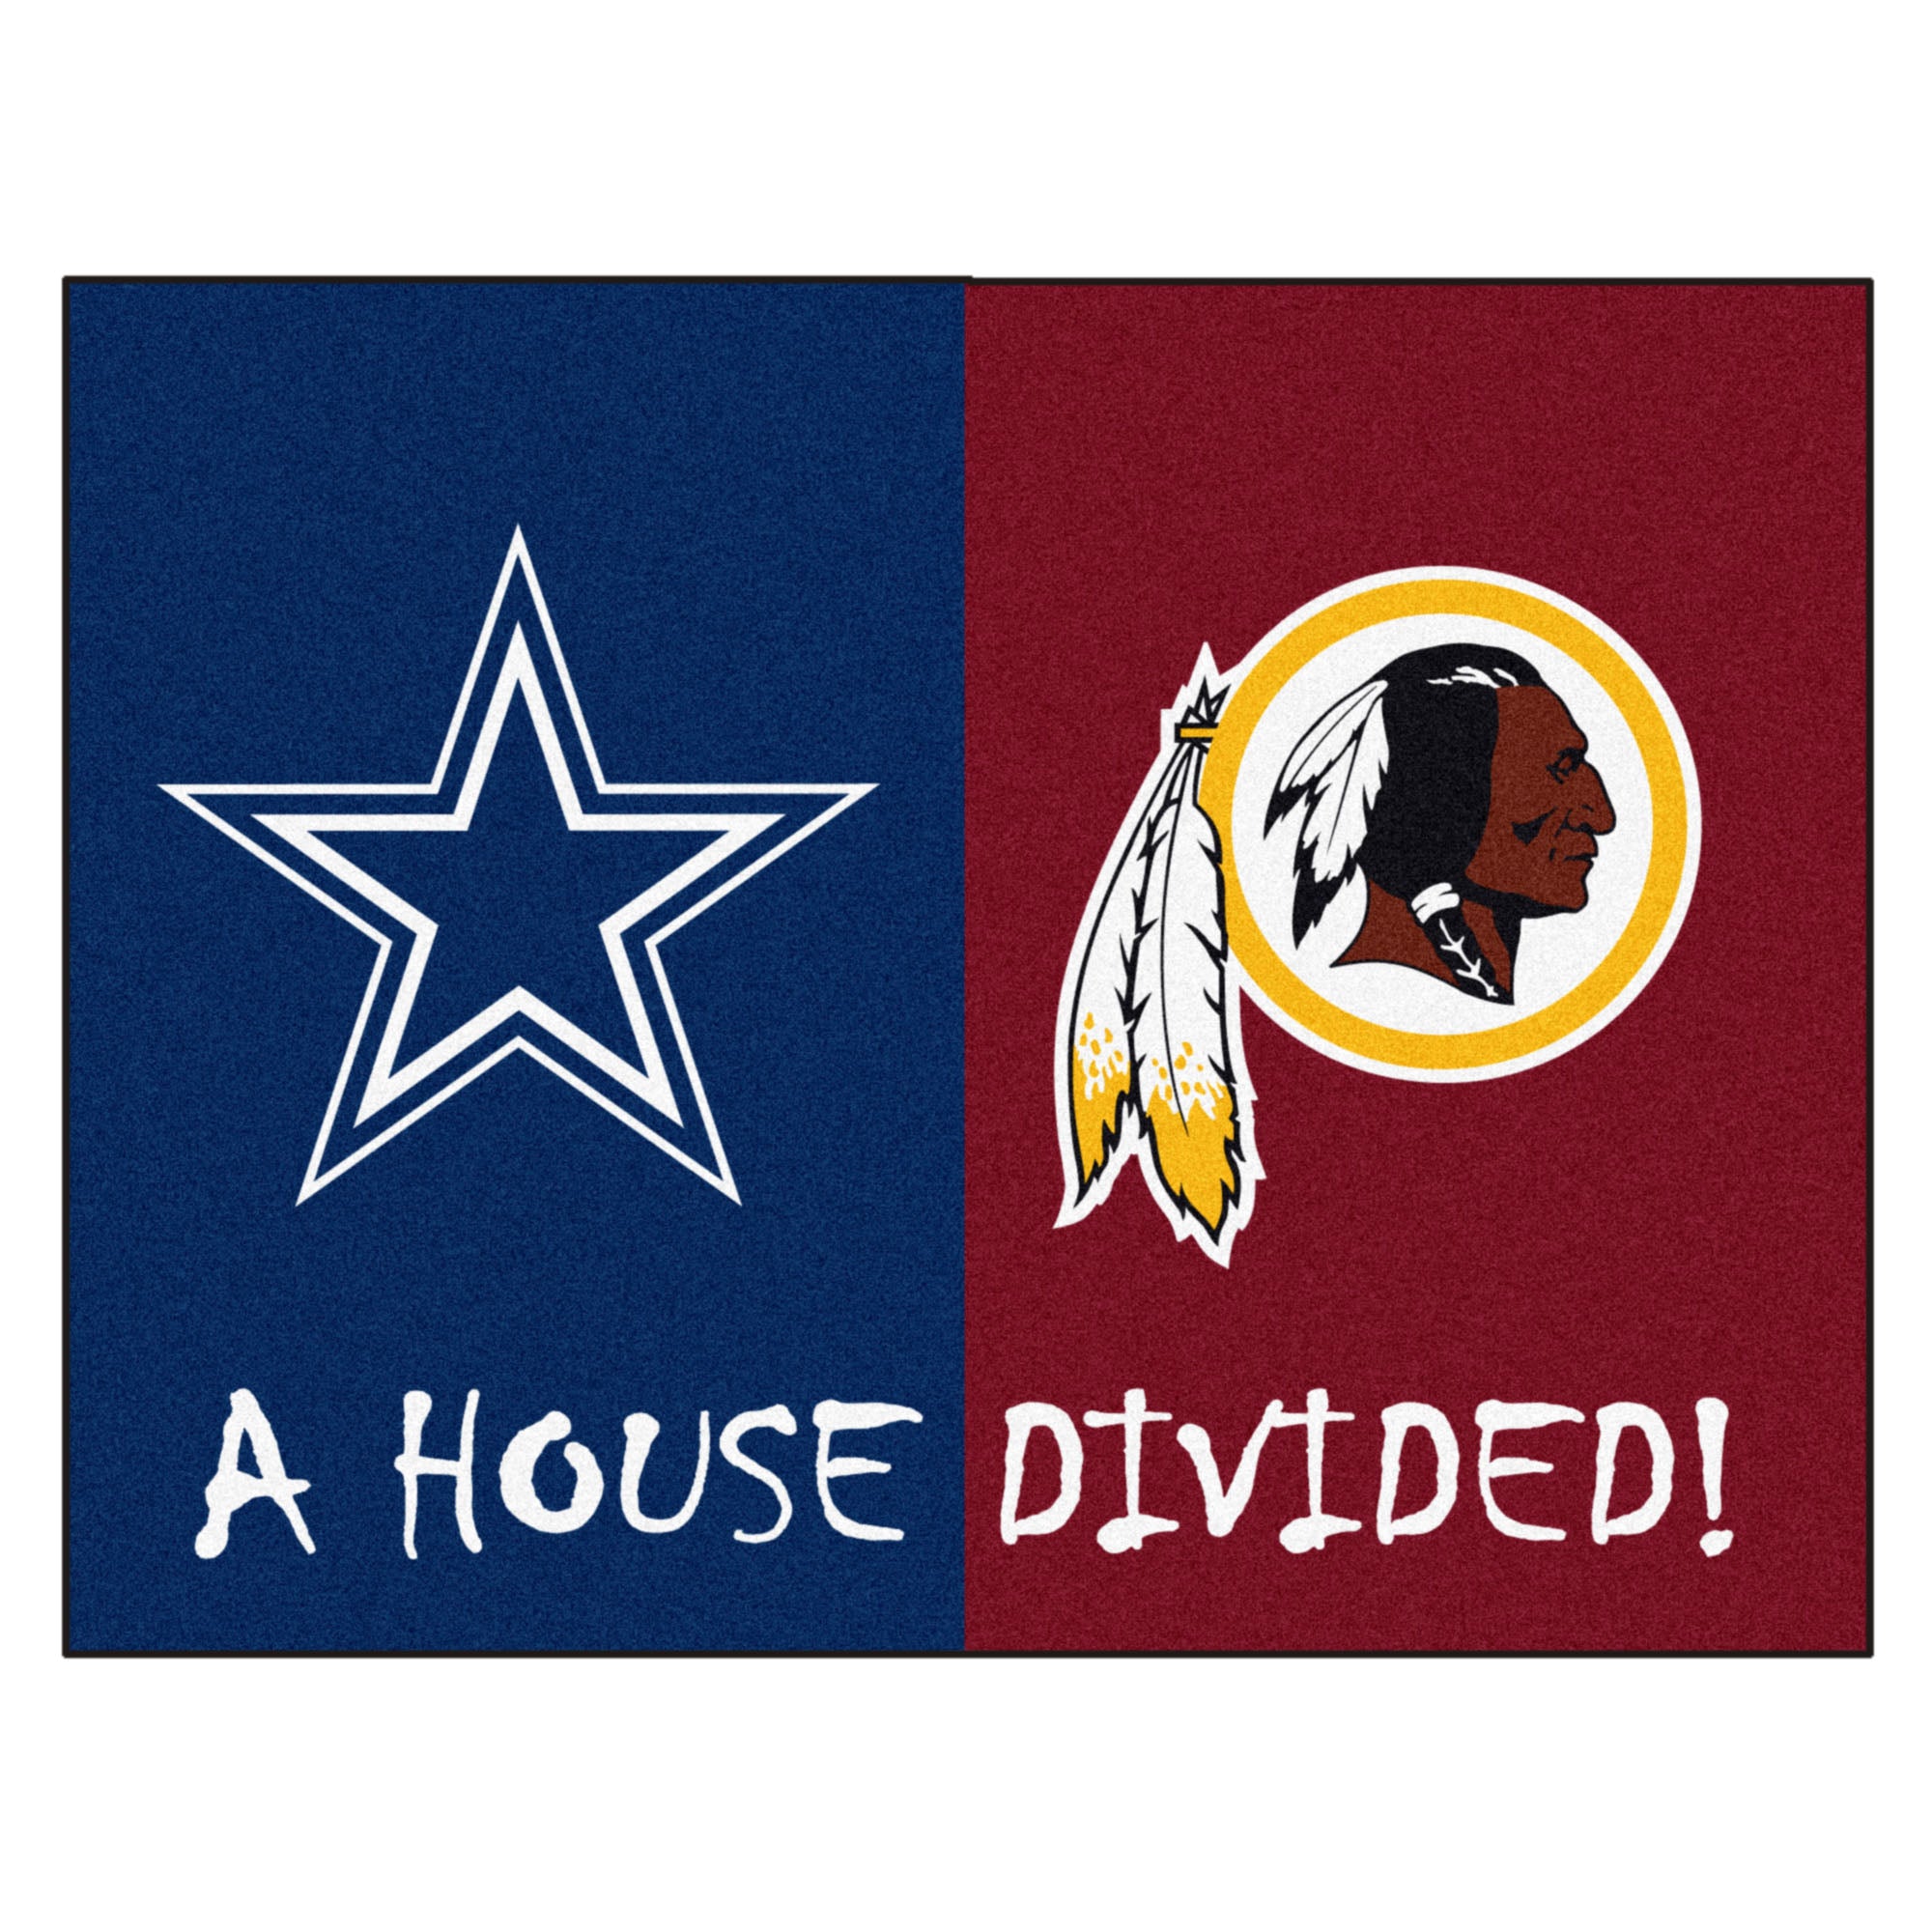 NFL House Divided - Cowboys / Redskins House Divided Mat